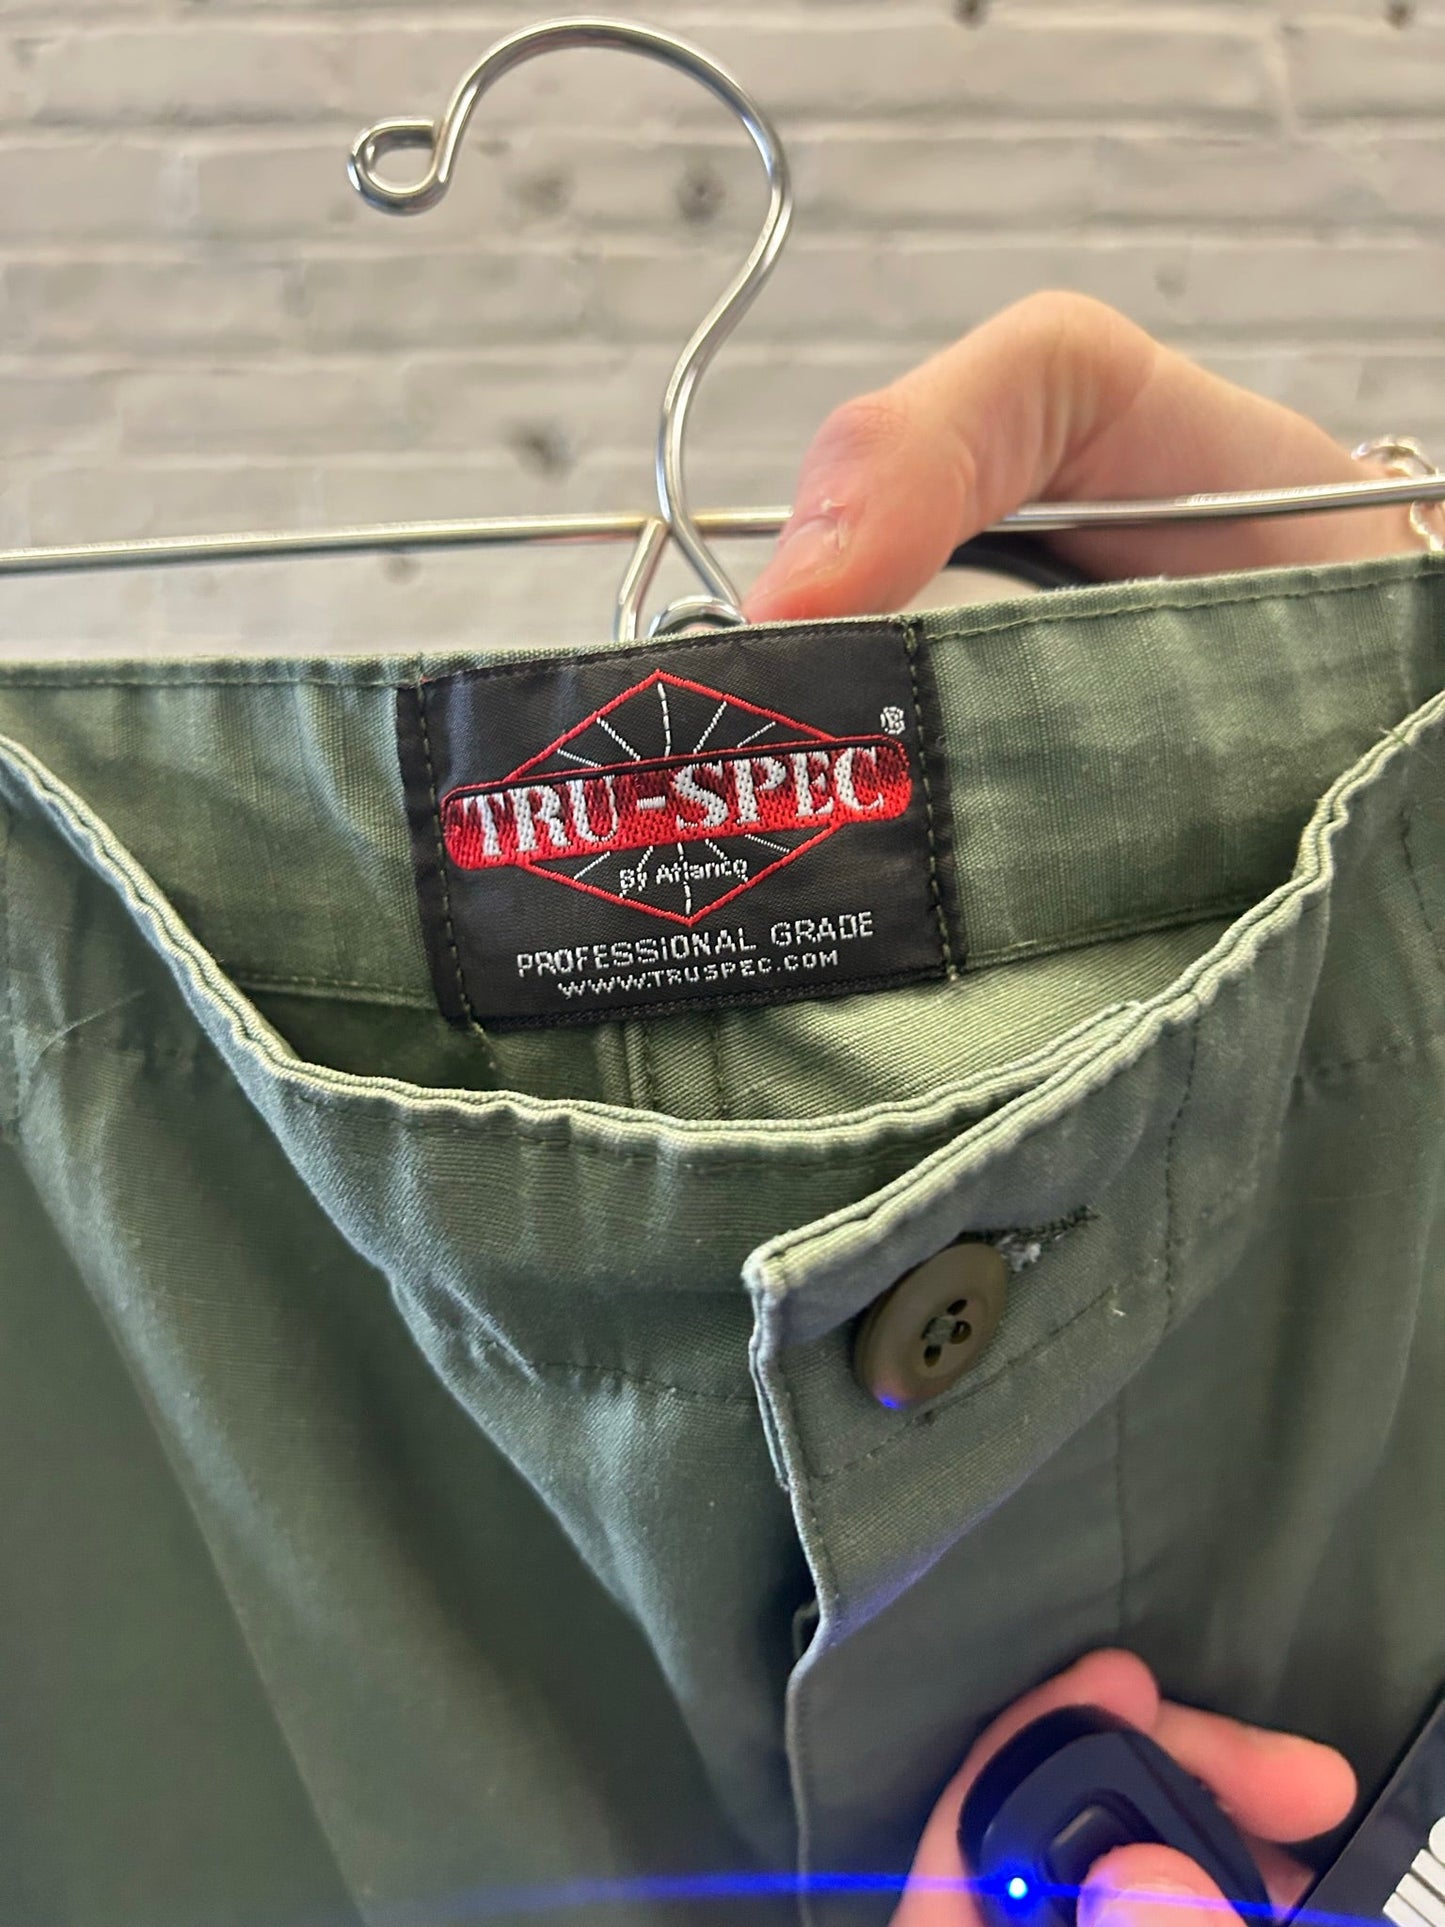 Military Tru Spec RipStop Cargo Pants